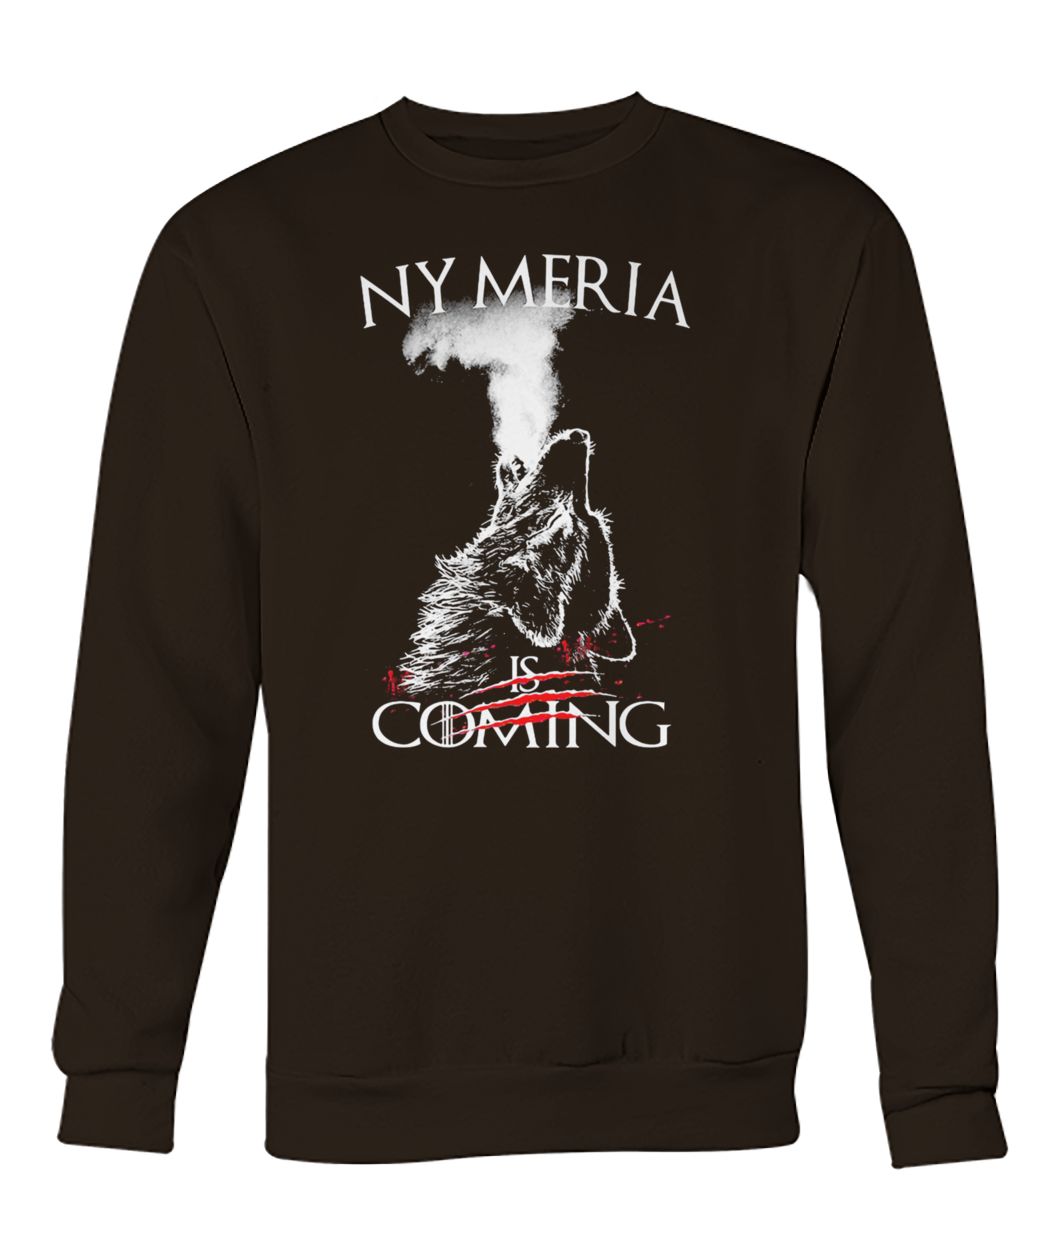 Nymeria is coming game of thrones crew neck sweatshirt